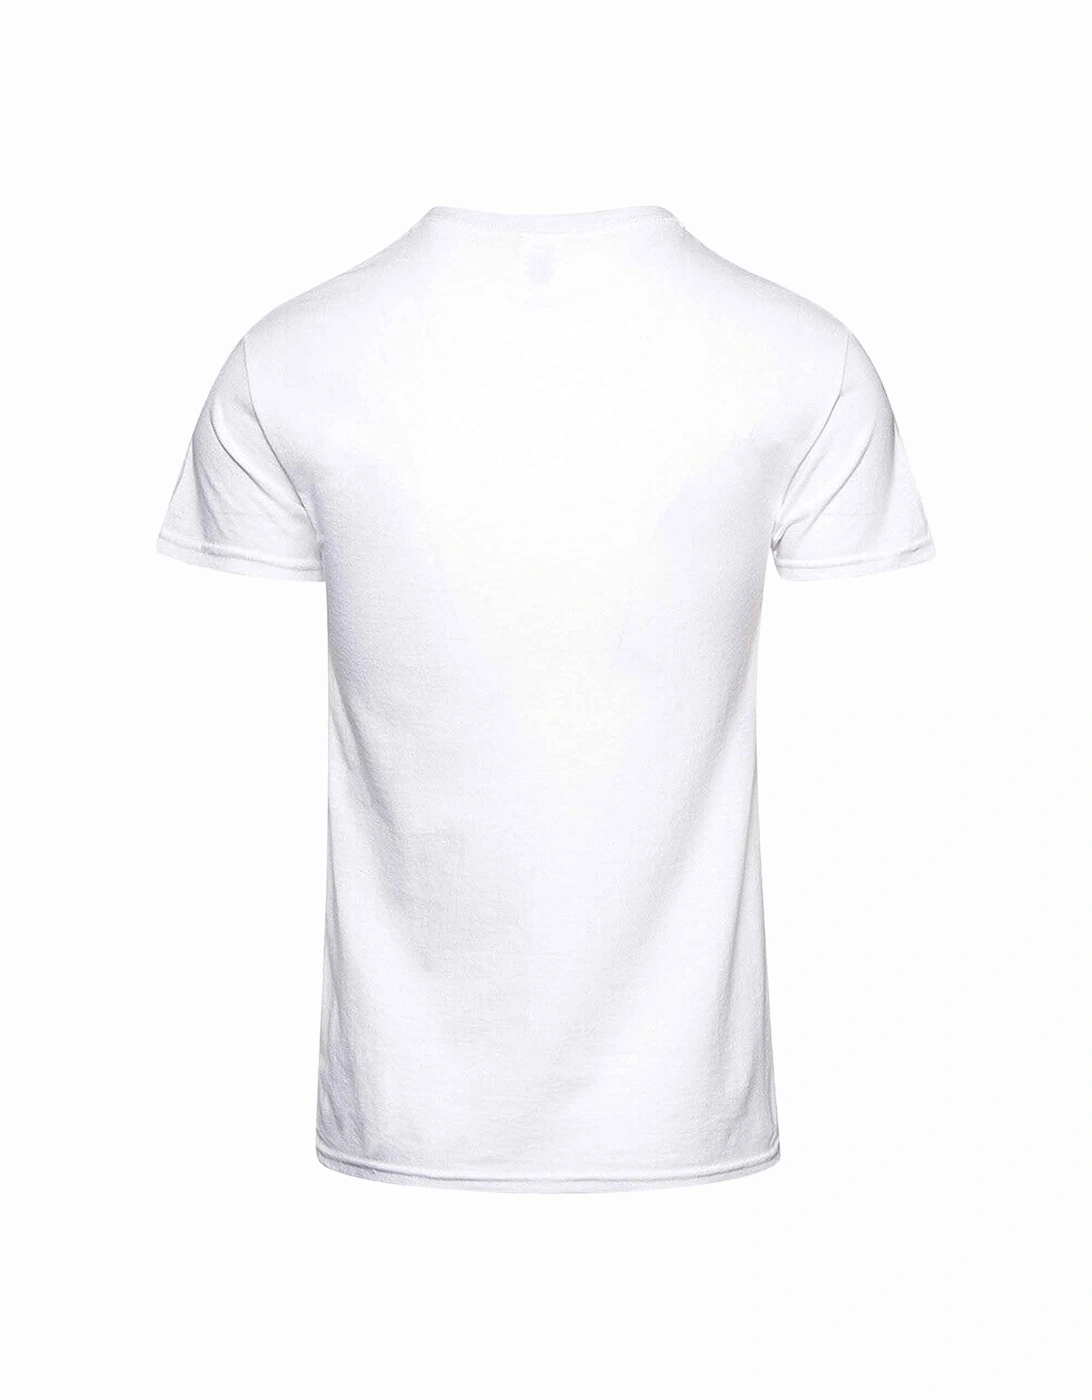 Unisex Adult Asterisk T-Shirt